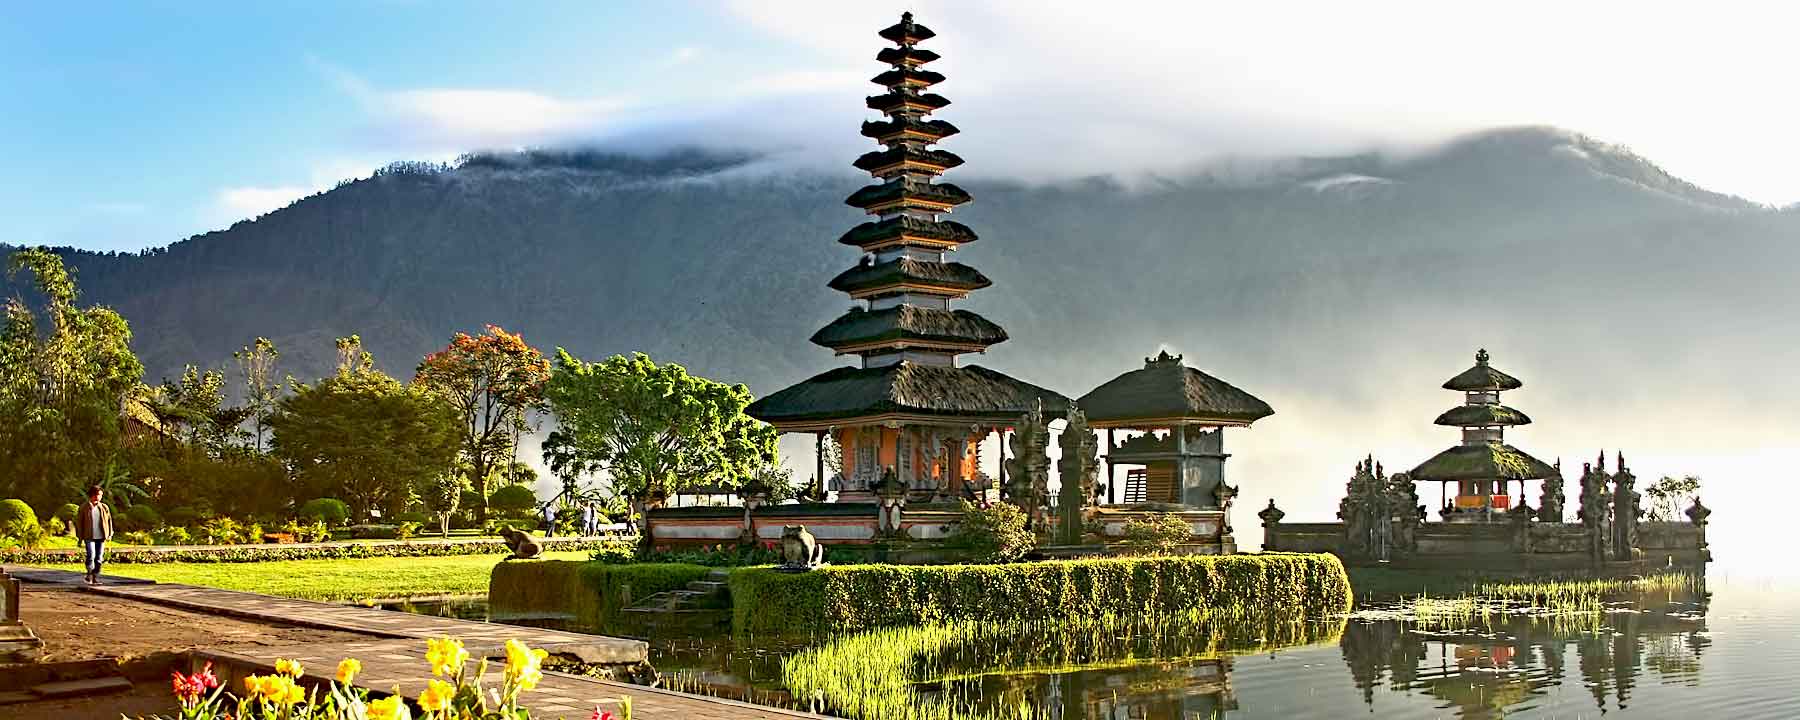 Bali Bedugul Pura Ulundanau Bratan Temple